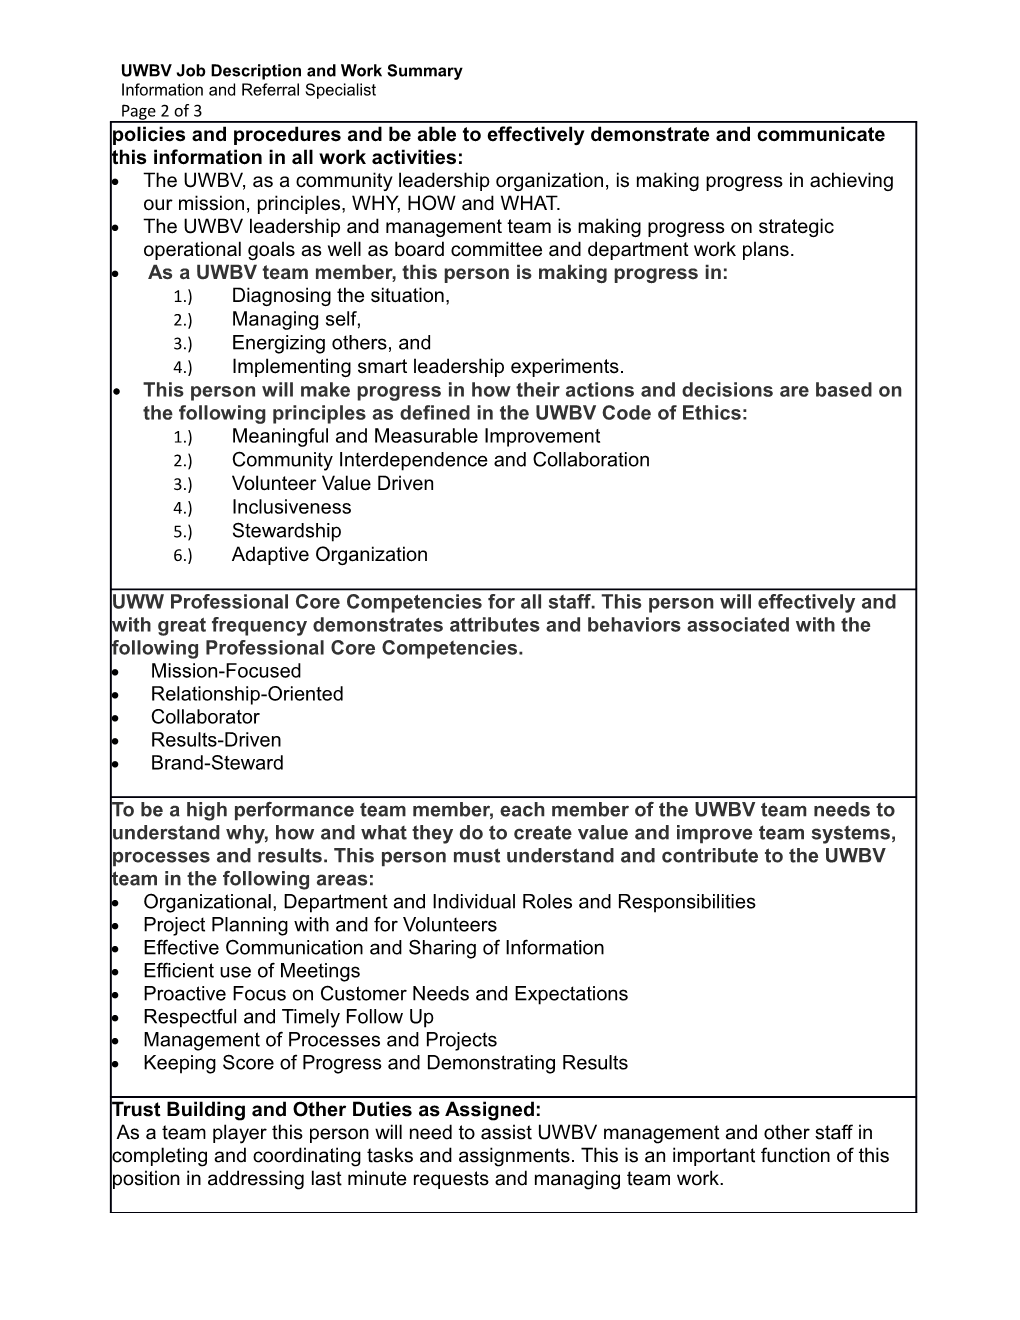 UWBV Job Description and Work Summary